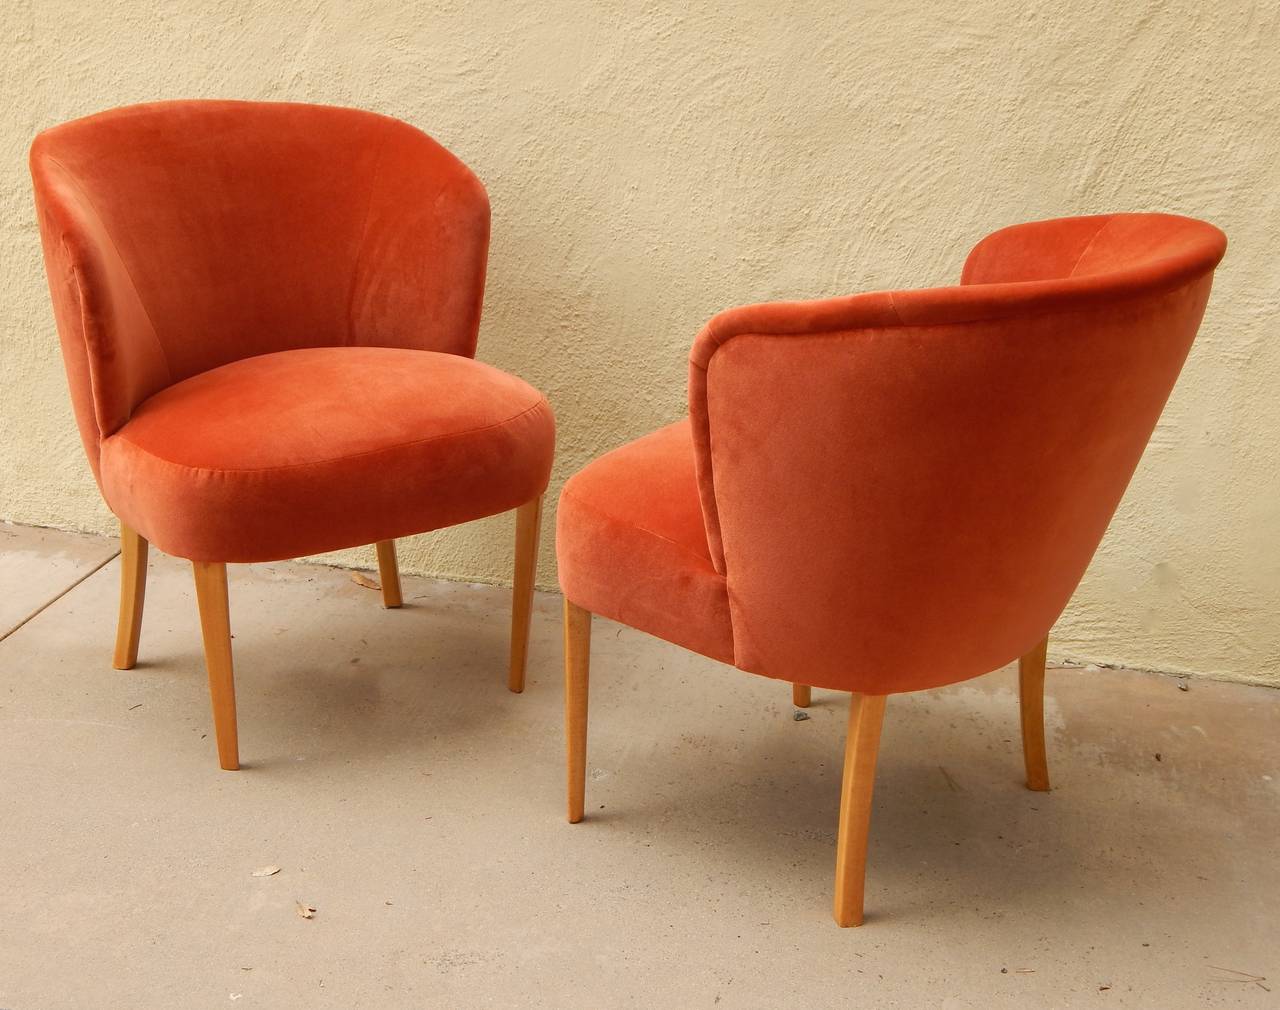 Mid-20th Century Pair of Swedish Upholstered Chairs, Carl Malmsten for O.H. Sjögren, circa 1950